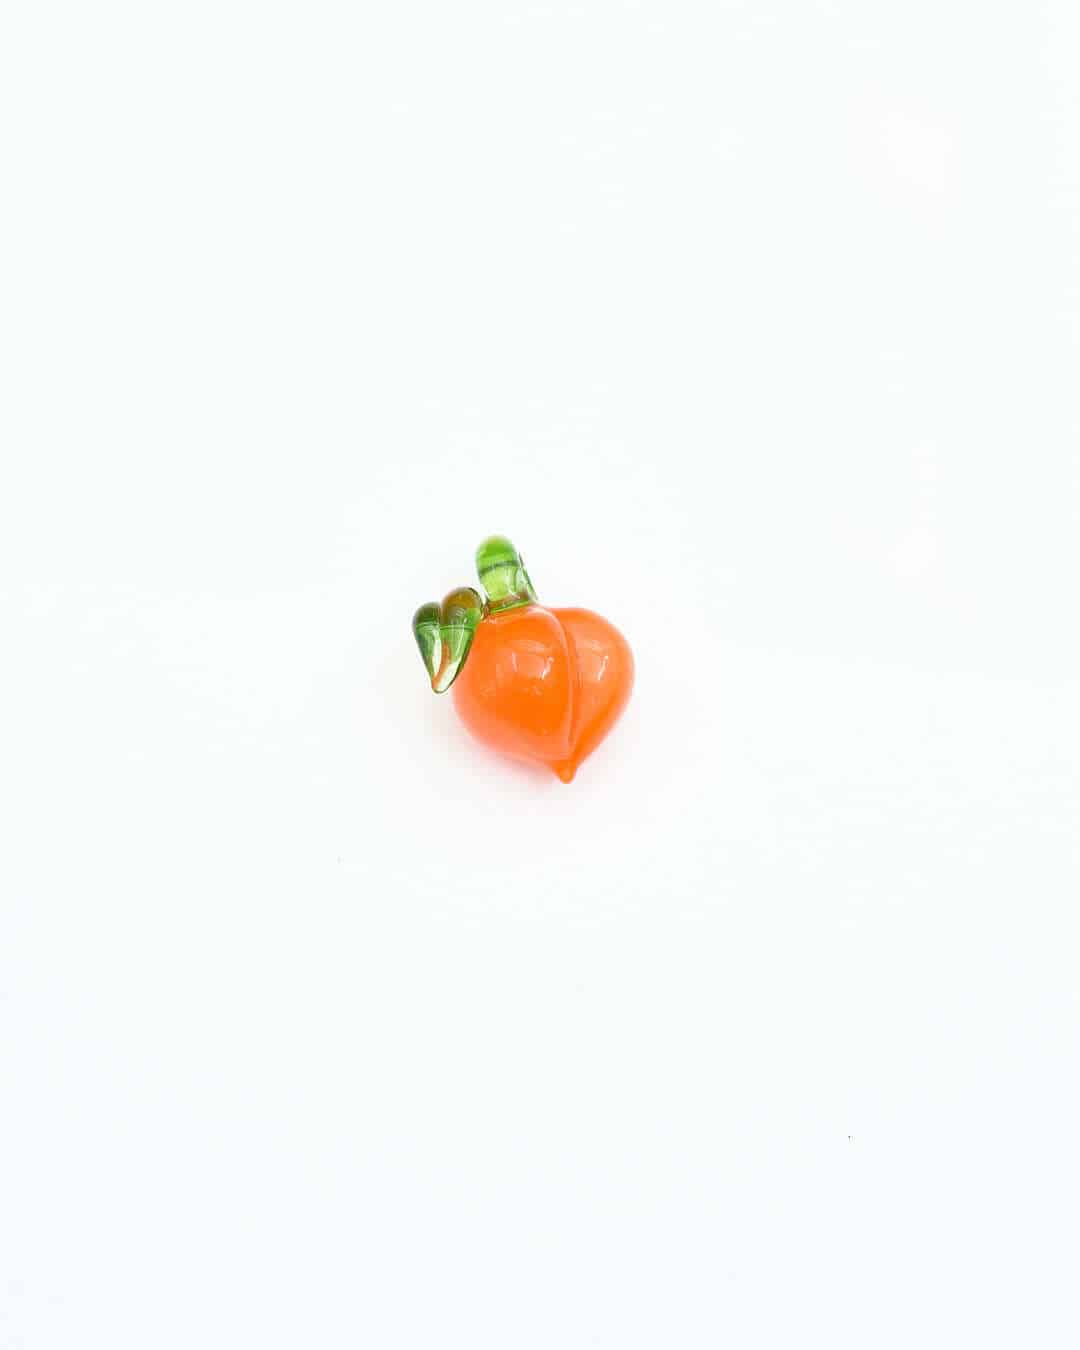 heady glass pendant - (39C) Orange Peach w/ UV Green Stem Pendant by Gnarla Carla